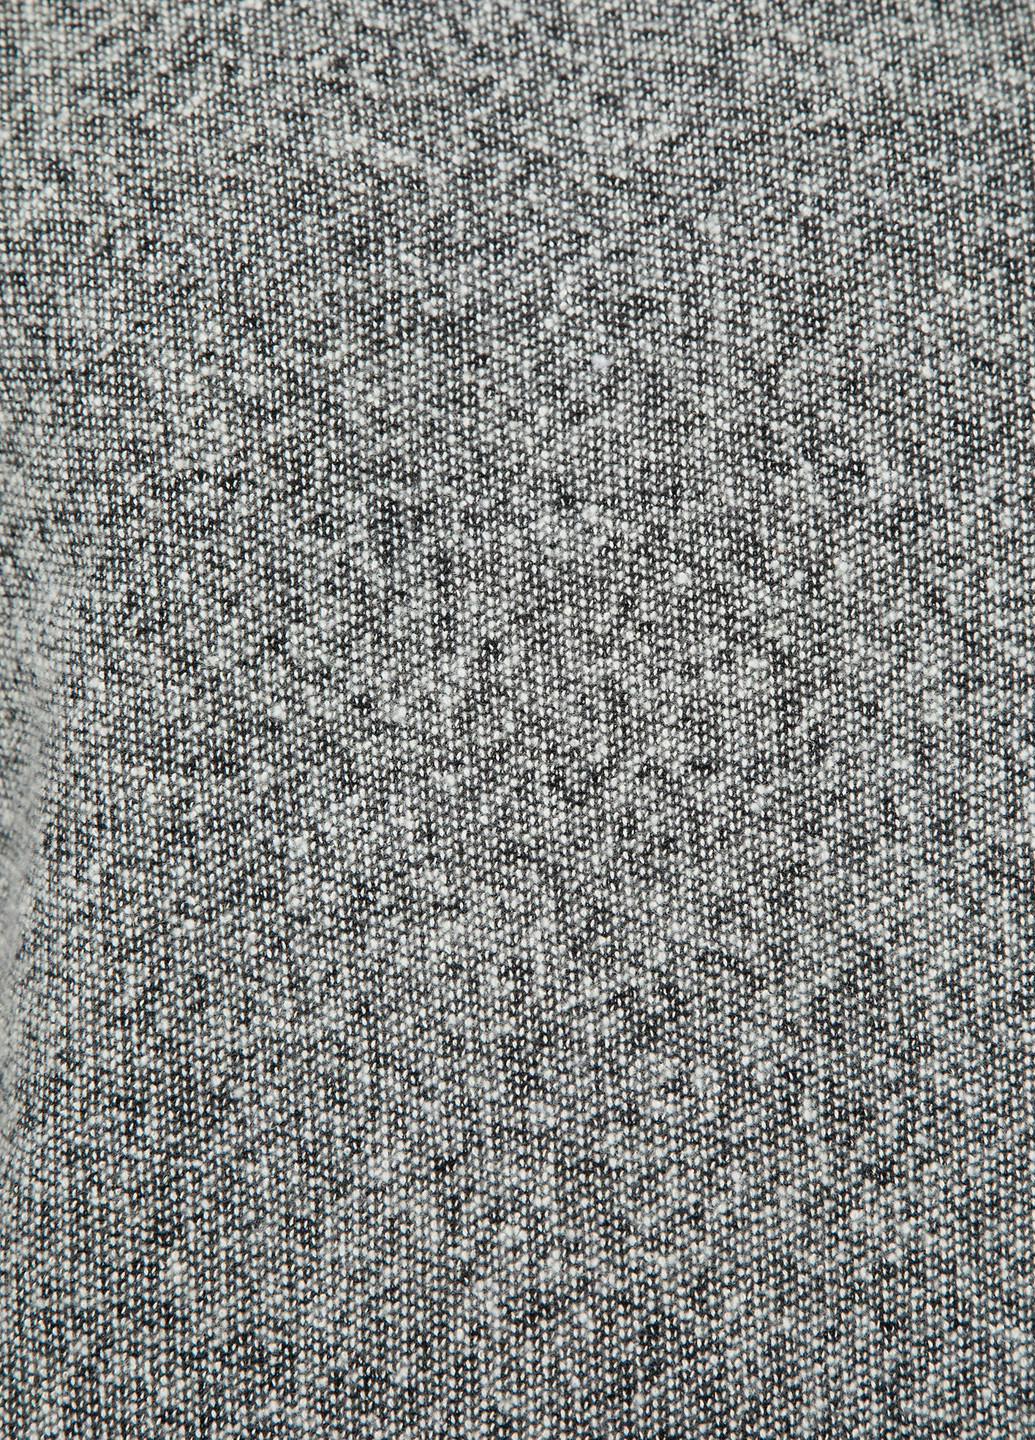 Грифельно-серый демисезонный джемпер джемпер KOTON